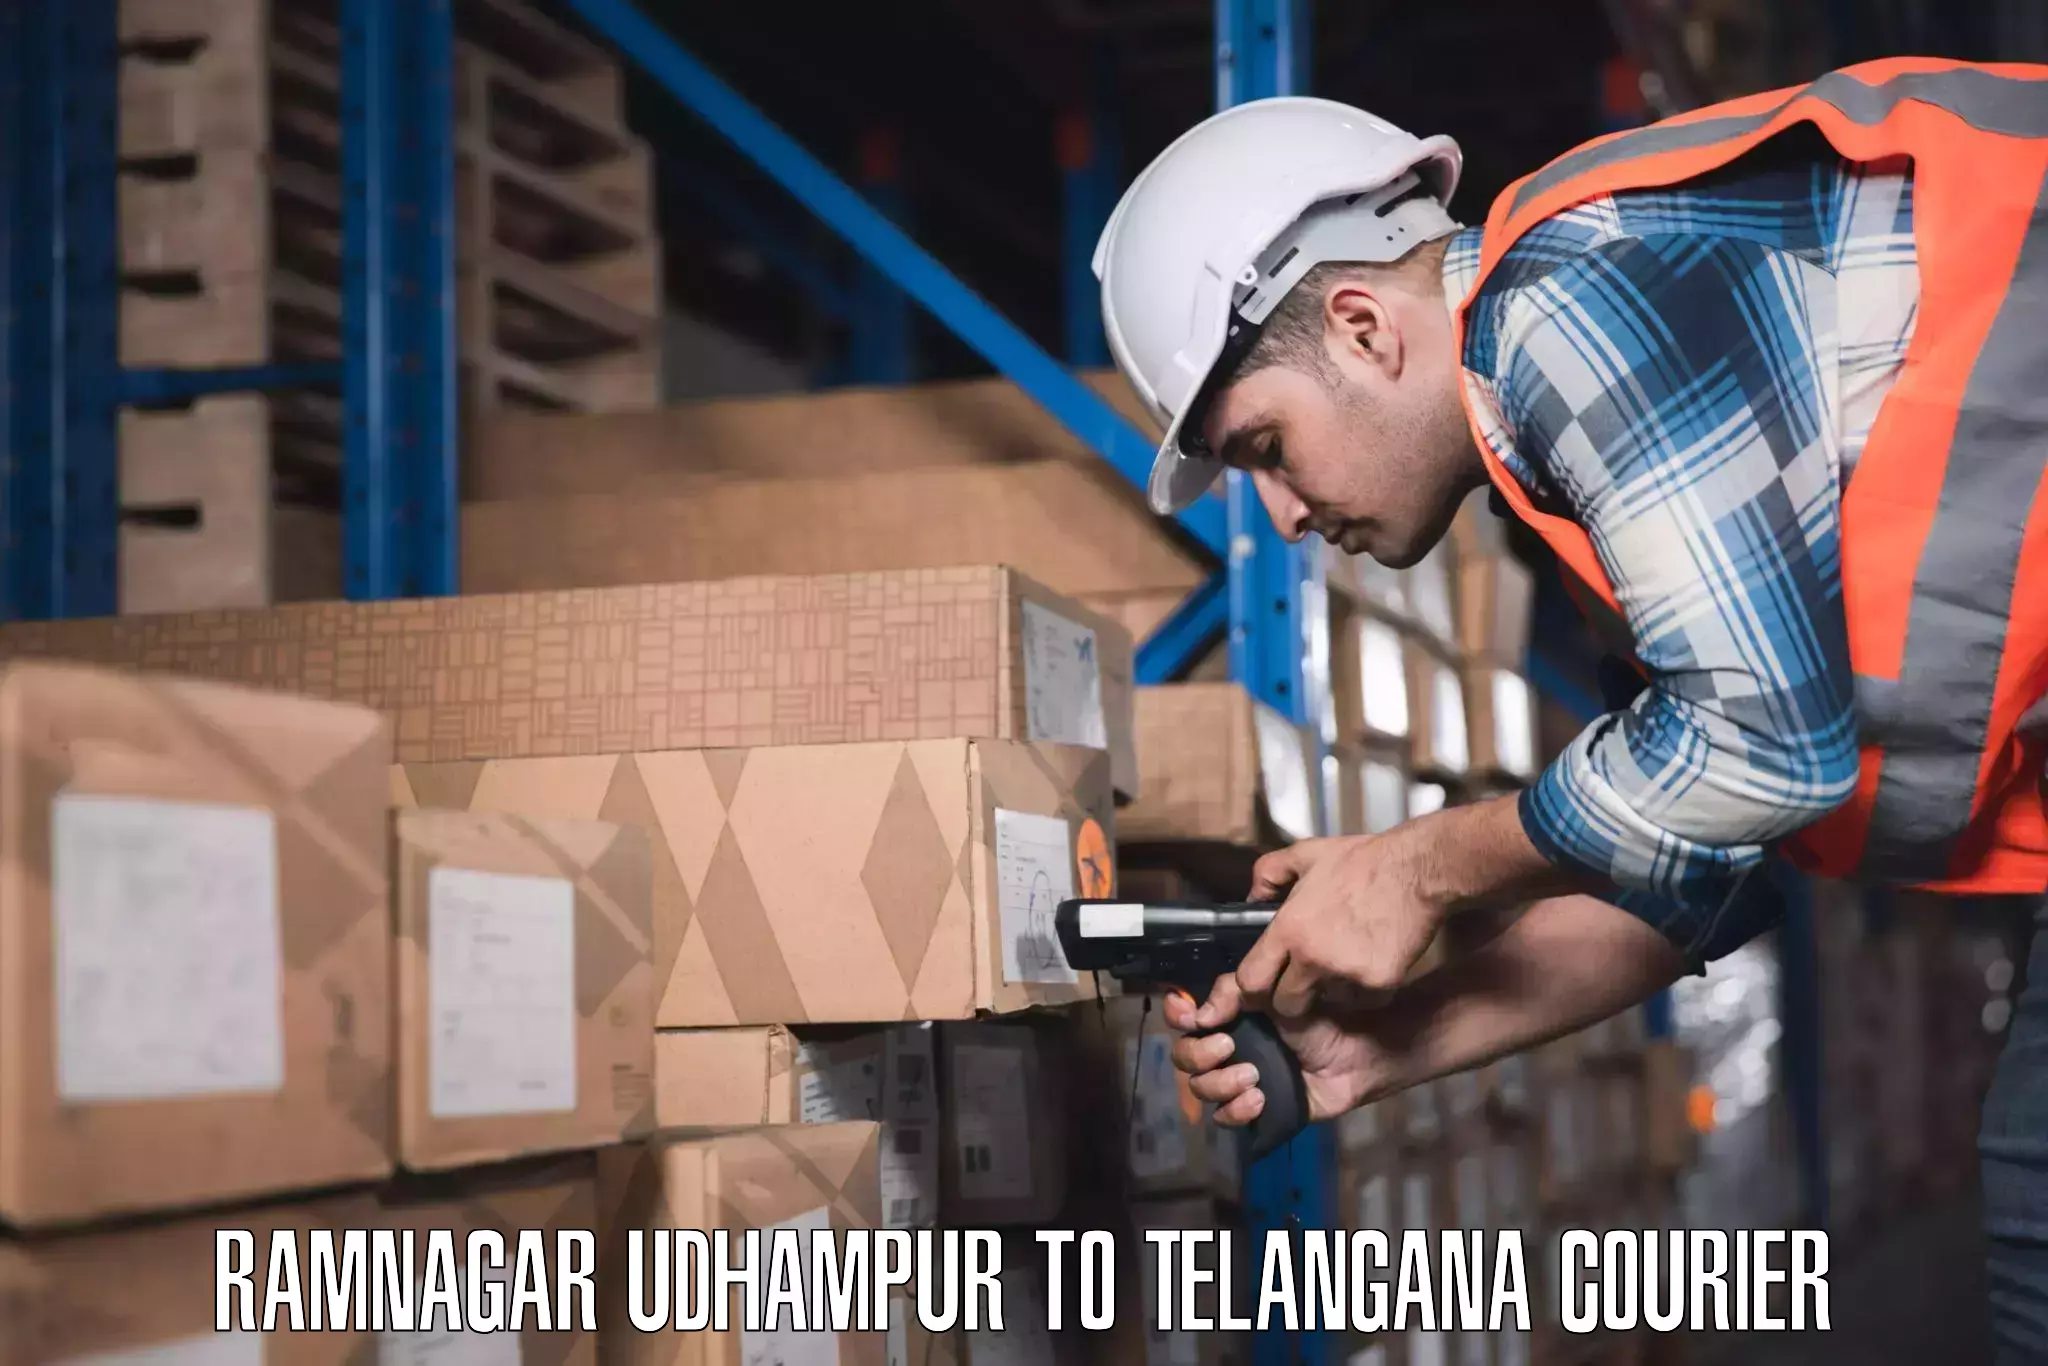 Baggage shipping service Ramnagar Udhampur to Sangareddy